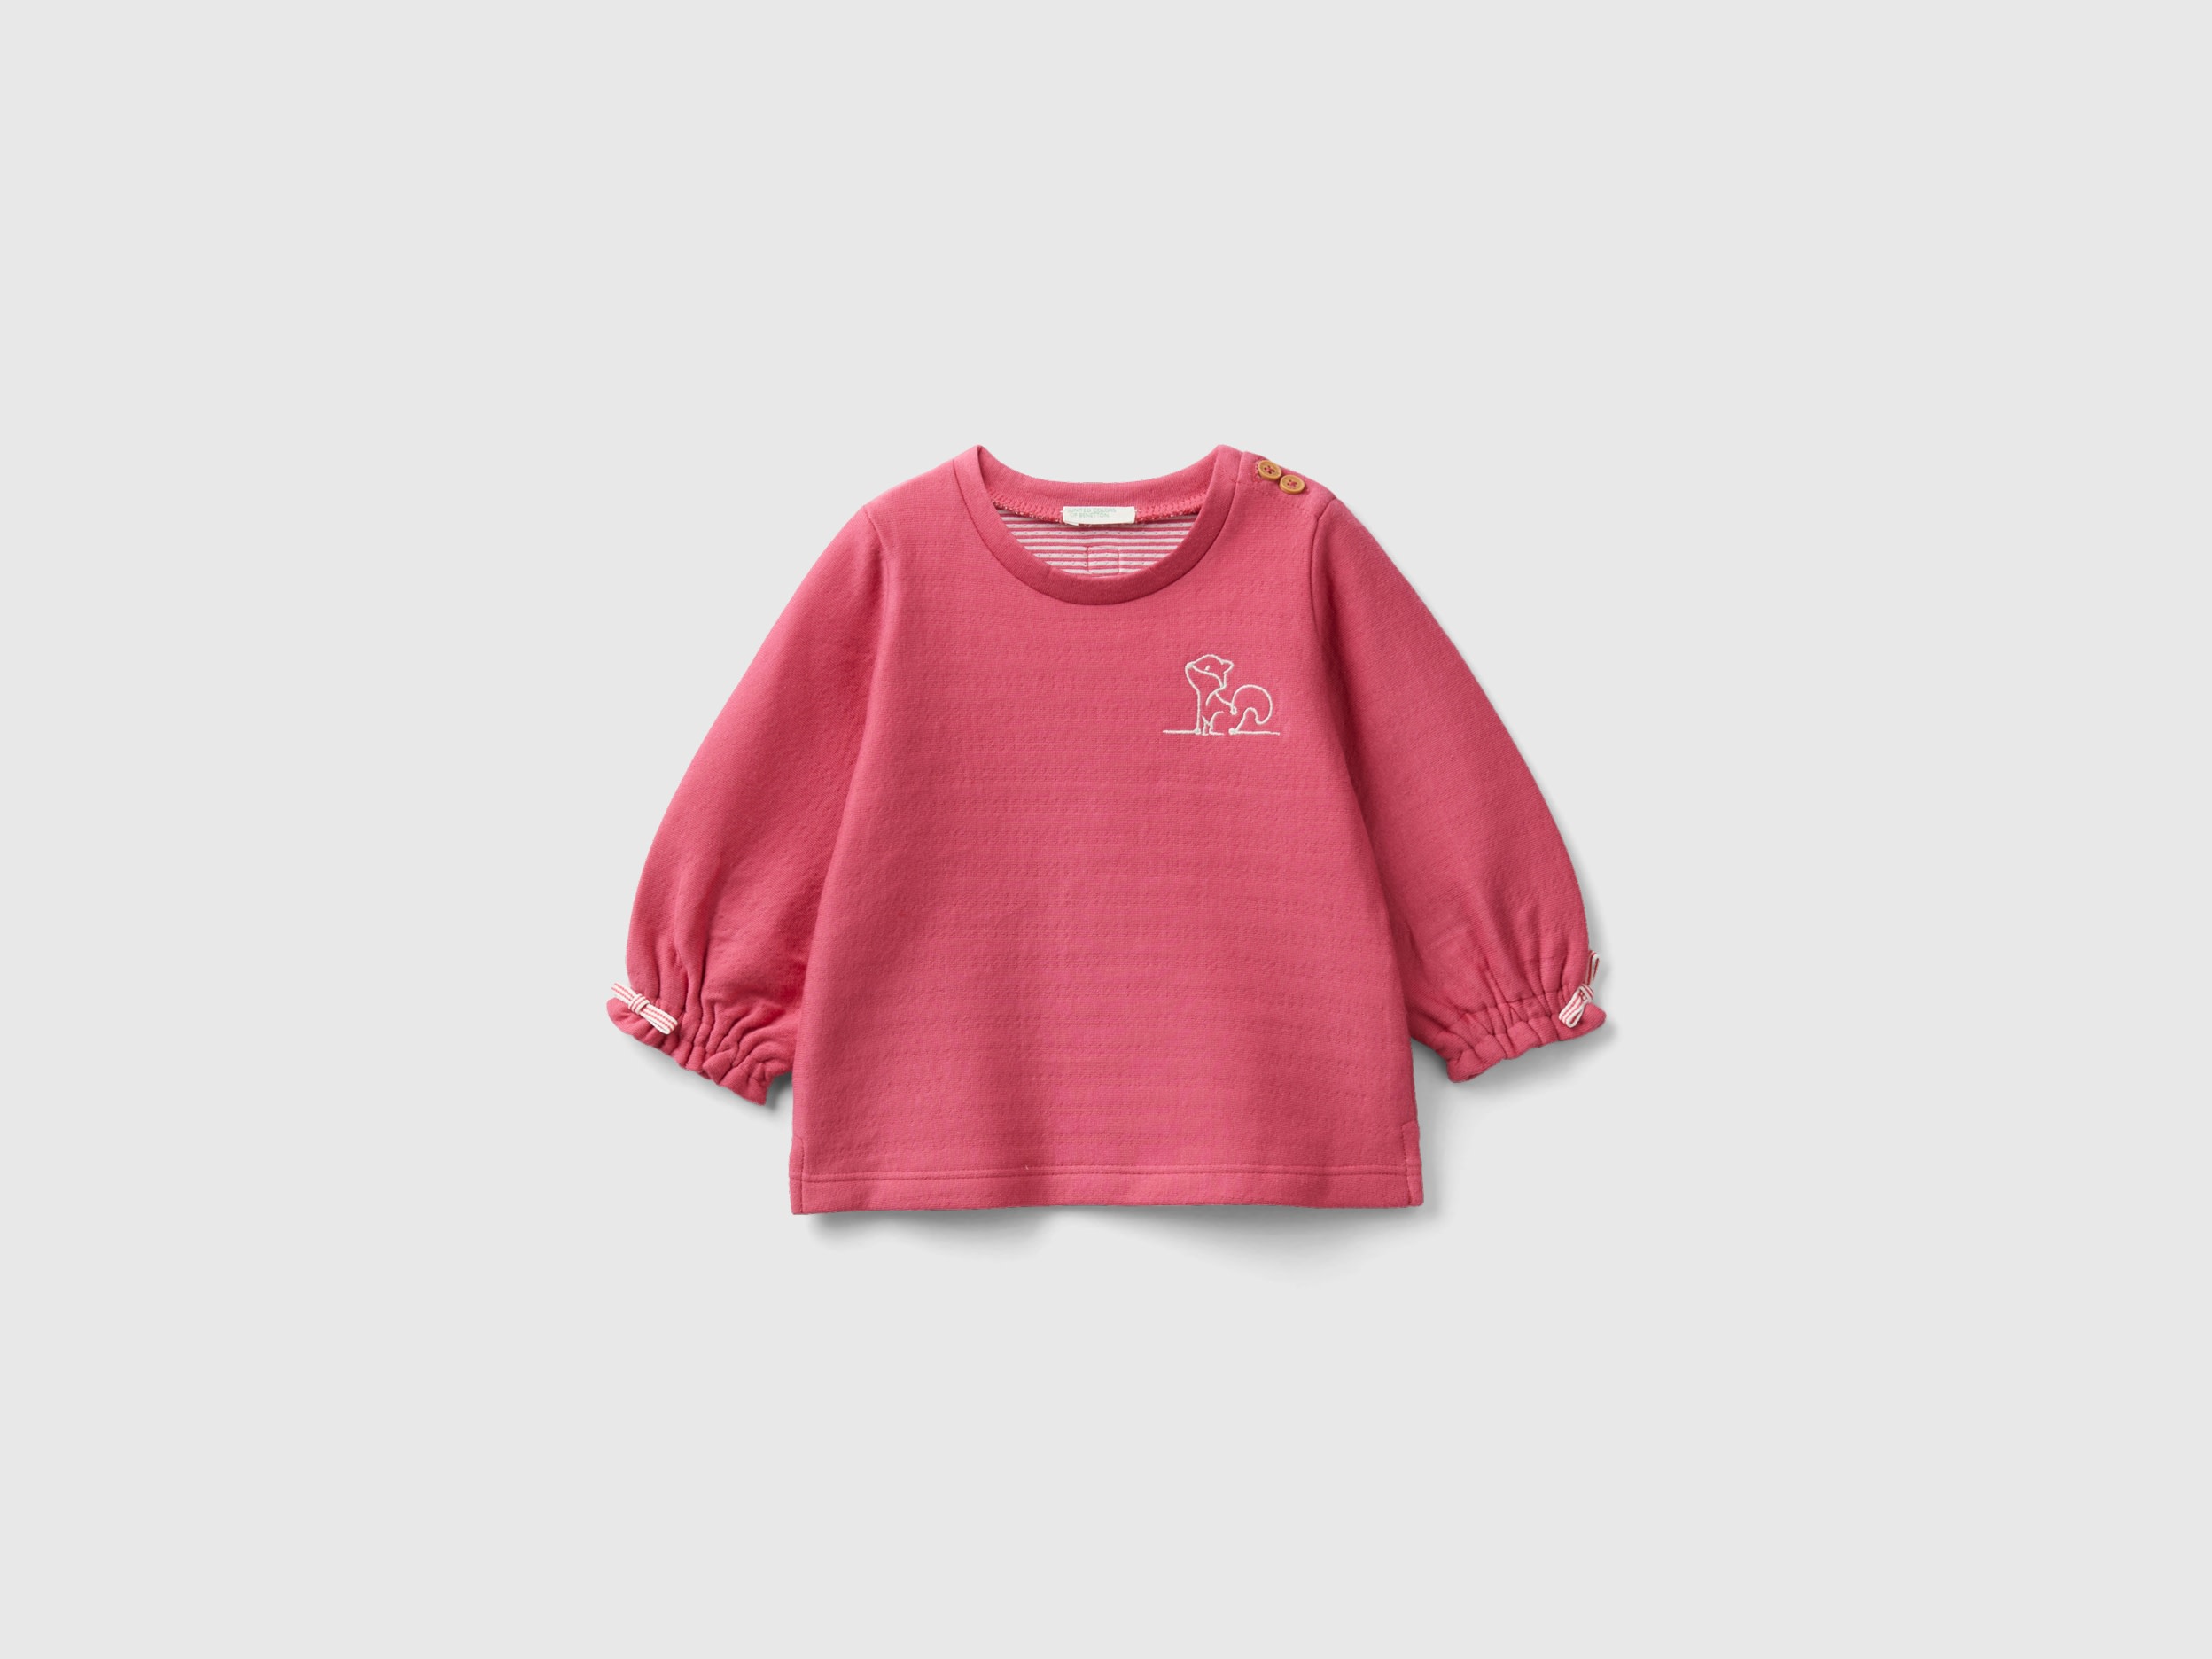 Benetton, Striped Sweatshirt With Embroidery, size 0-1, Salmon, Kids